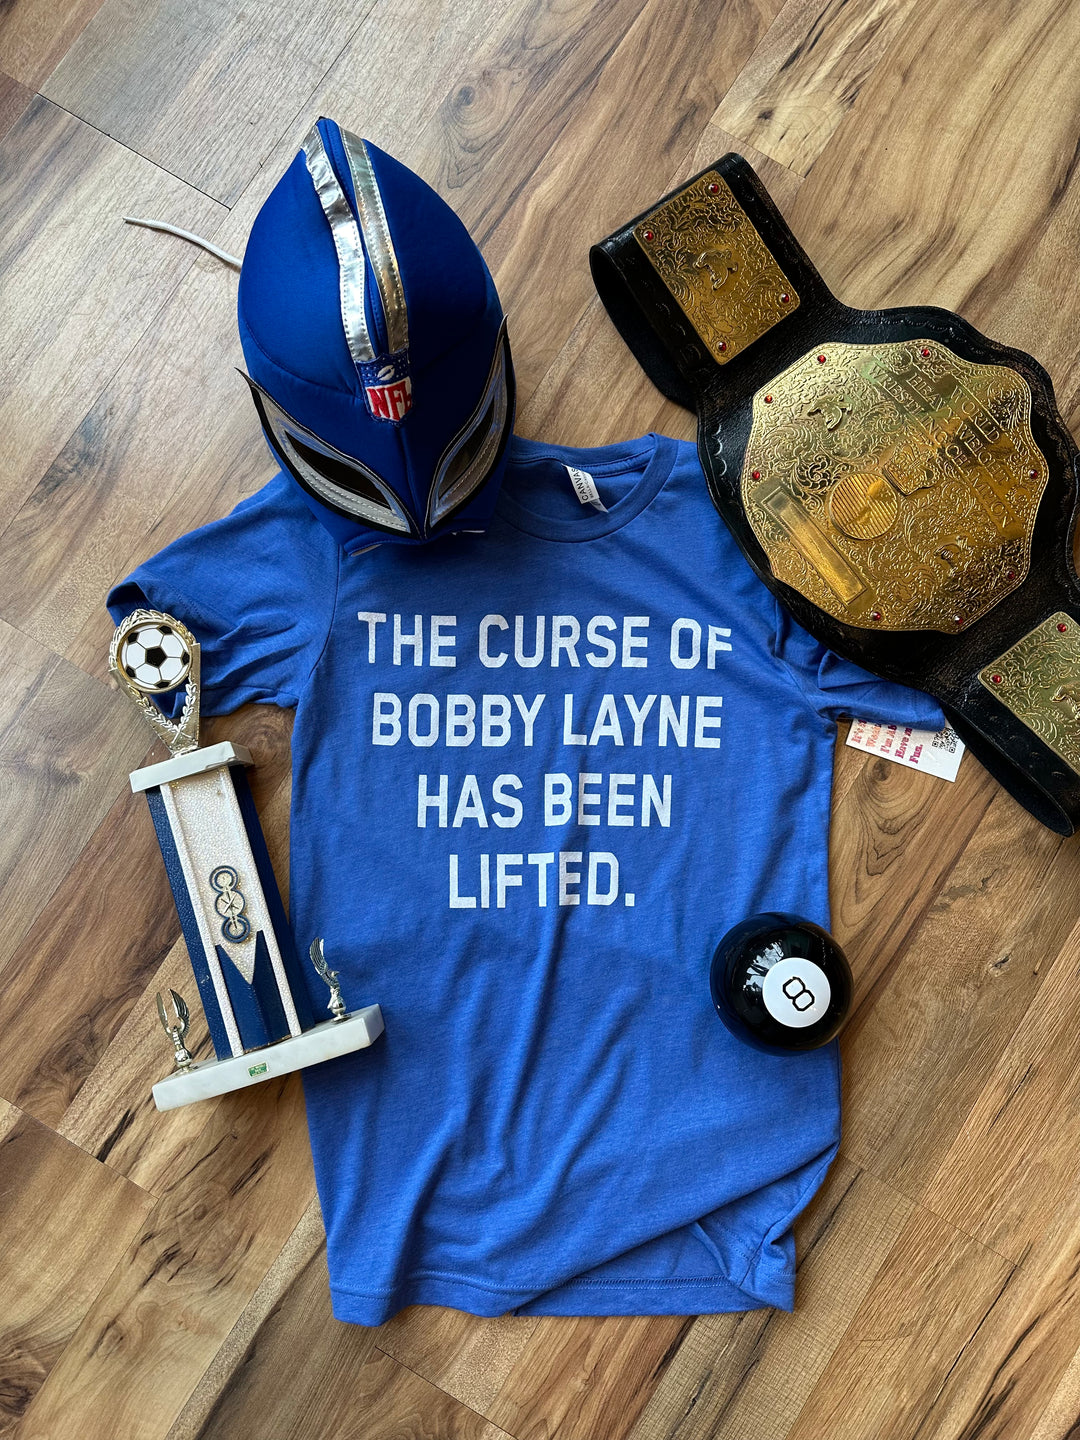 The curse of Bobby Layne